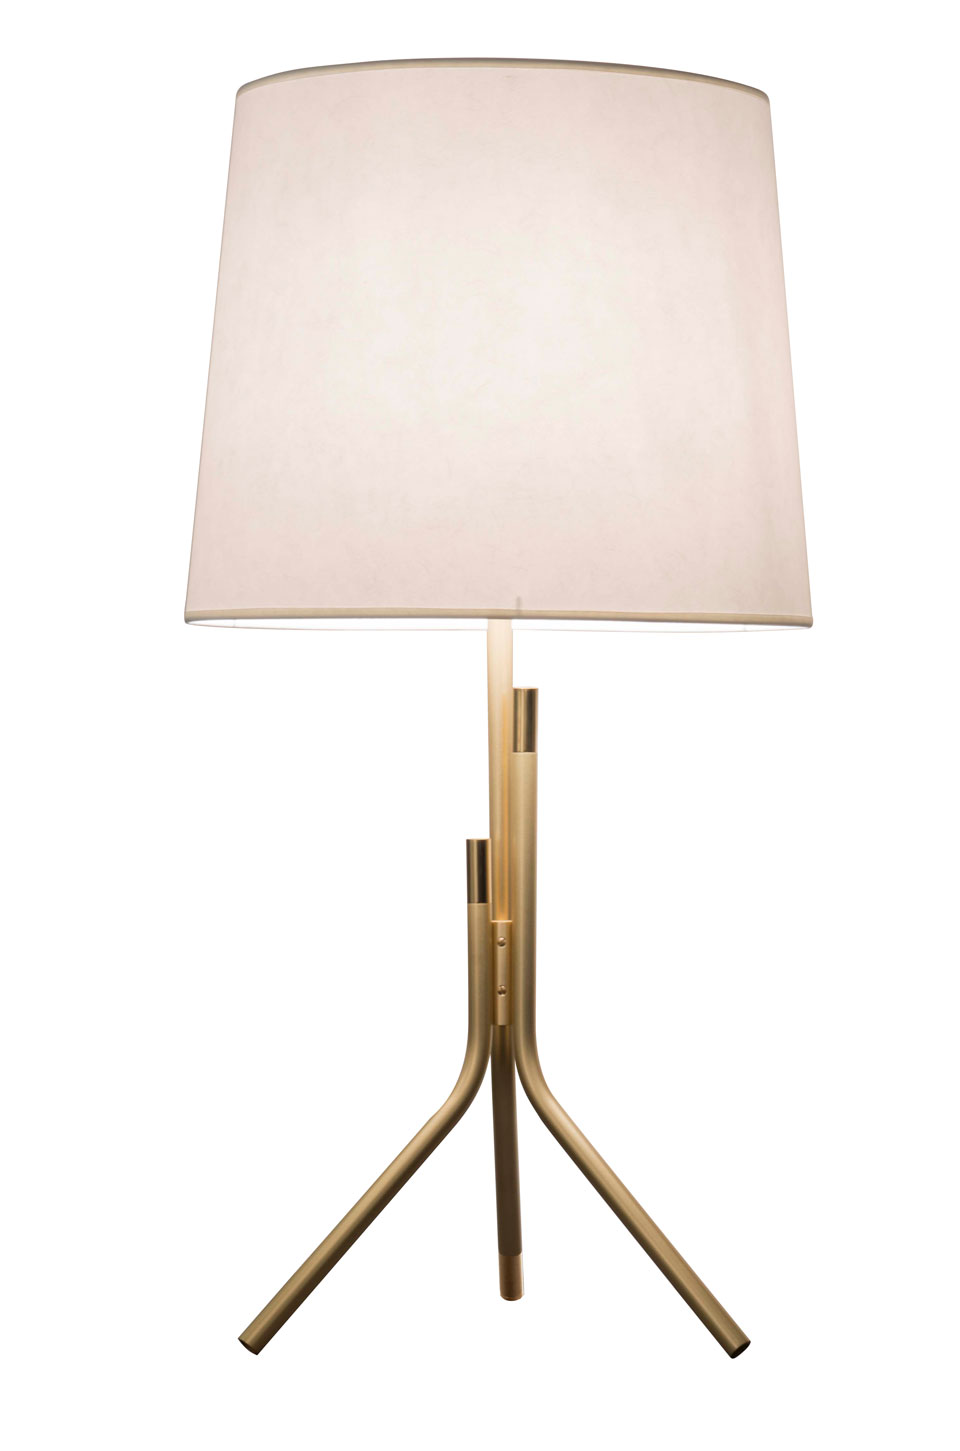 Ellis design table lamp, matte gold and bright white big lampshade. CVL Luminaires. 